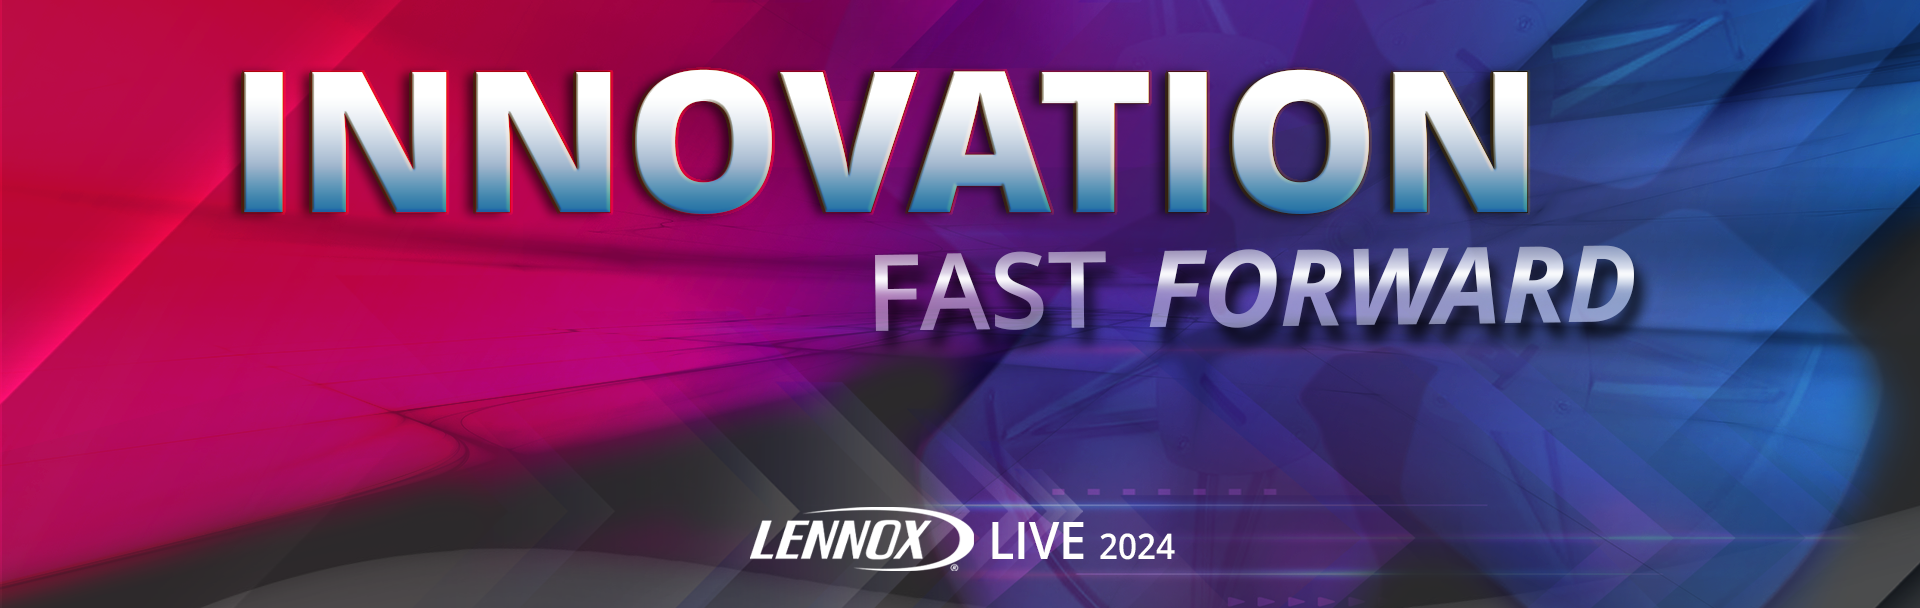 Innovation Fast Forward Lennox LIVE 2024